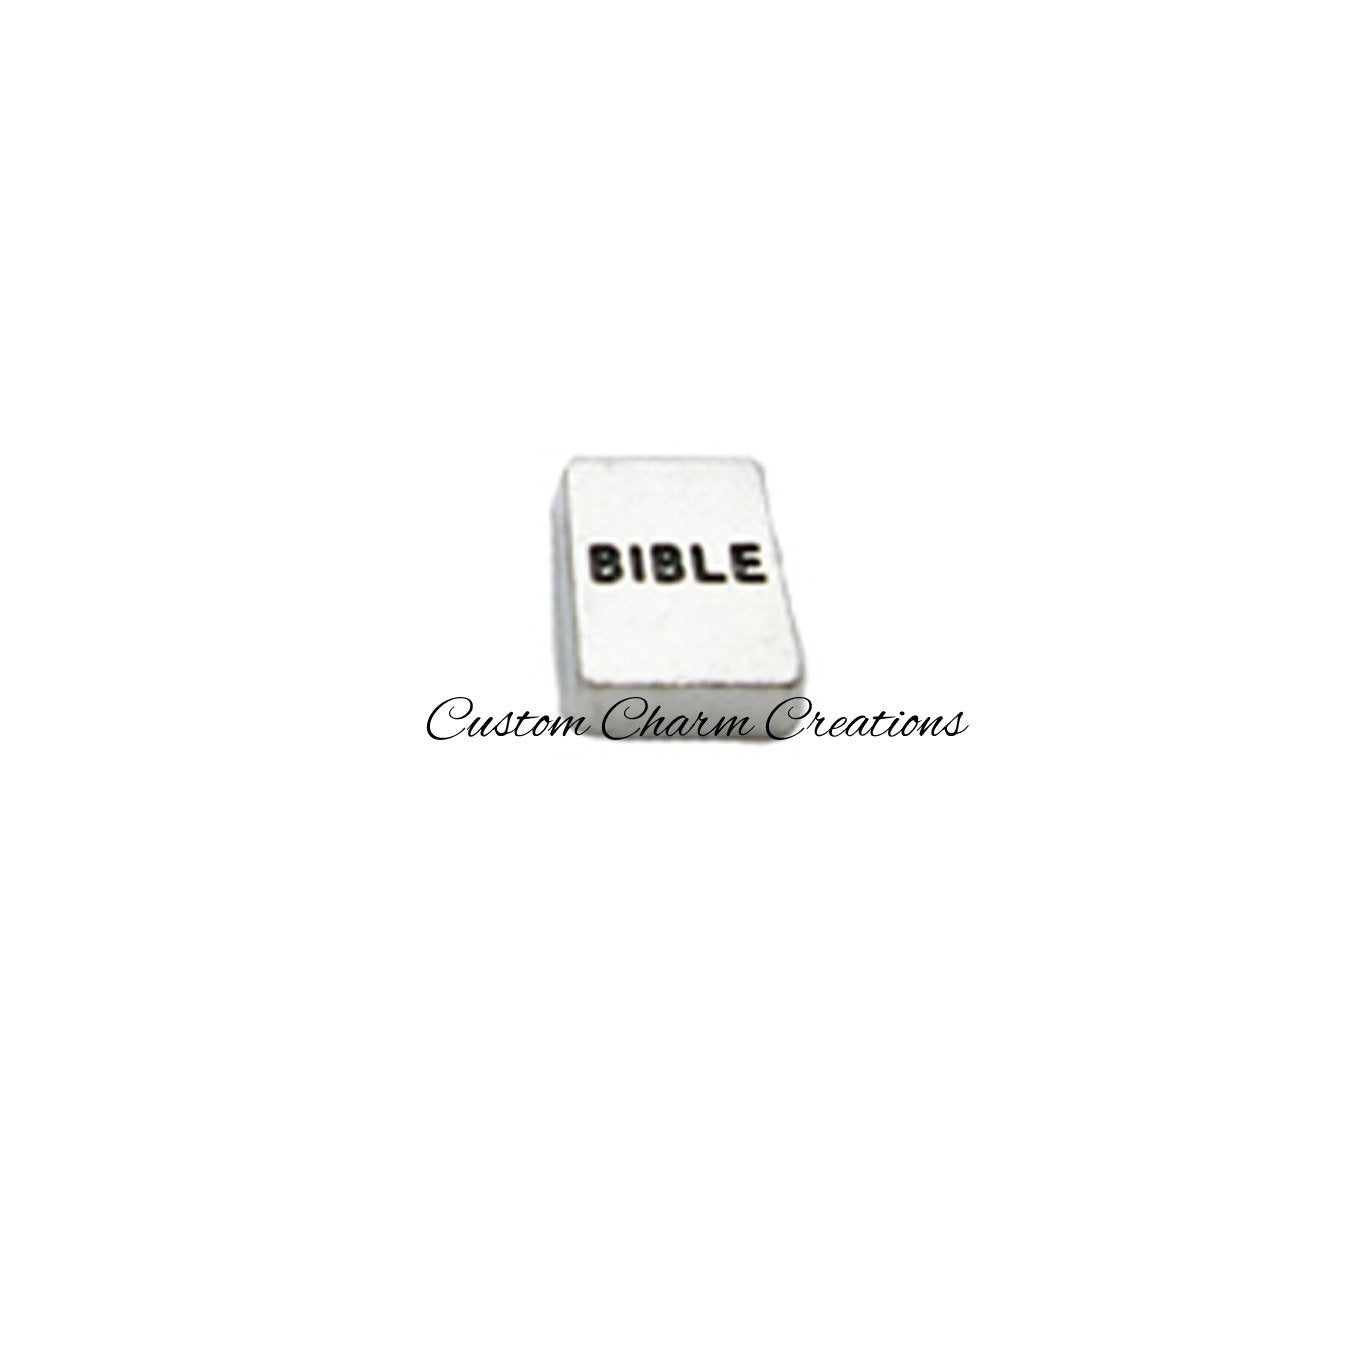 Silver Bible Floating Locket Charm - Custom Charm Creations